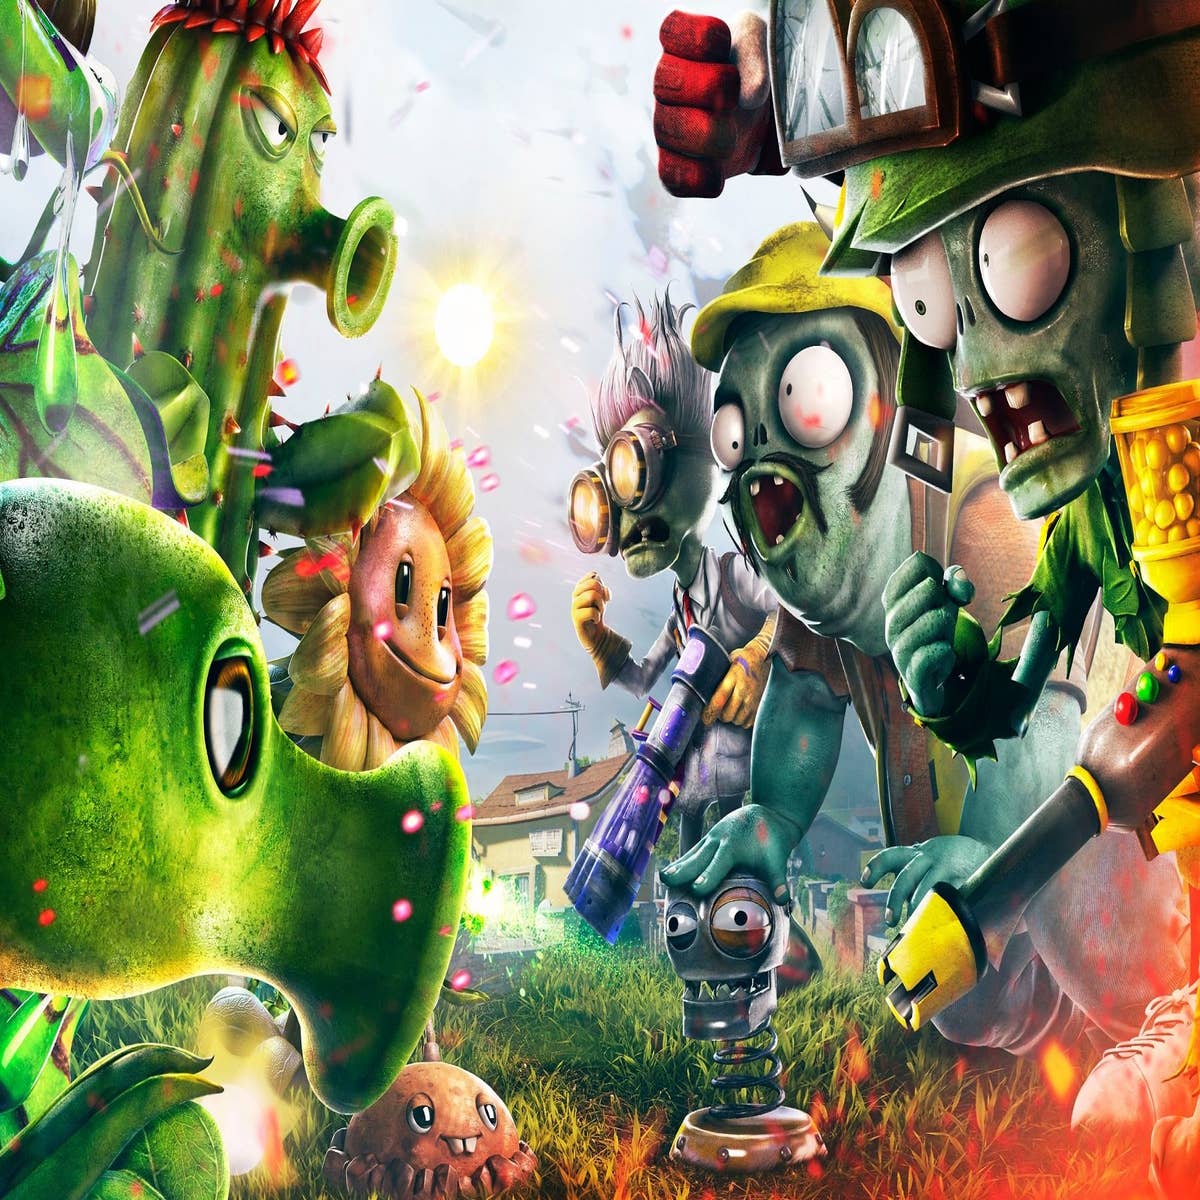 Plants vs Zombies Video Games - Official EA Site